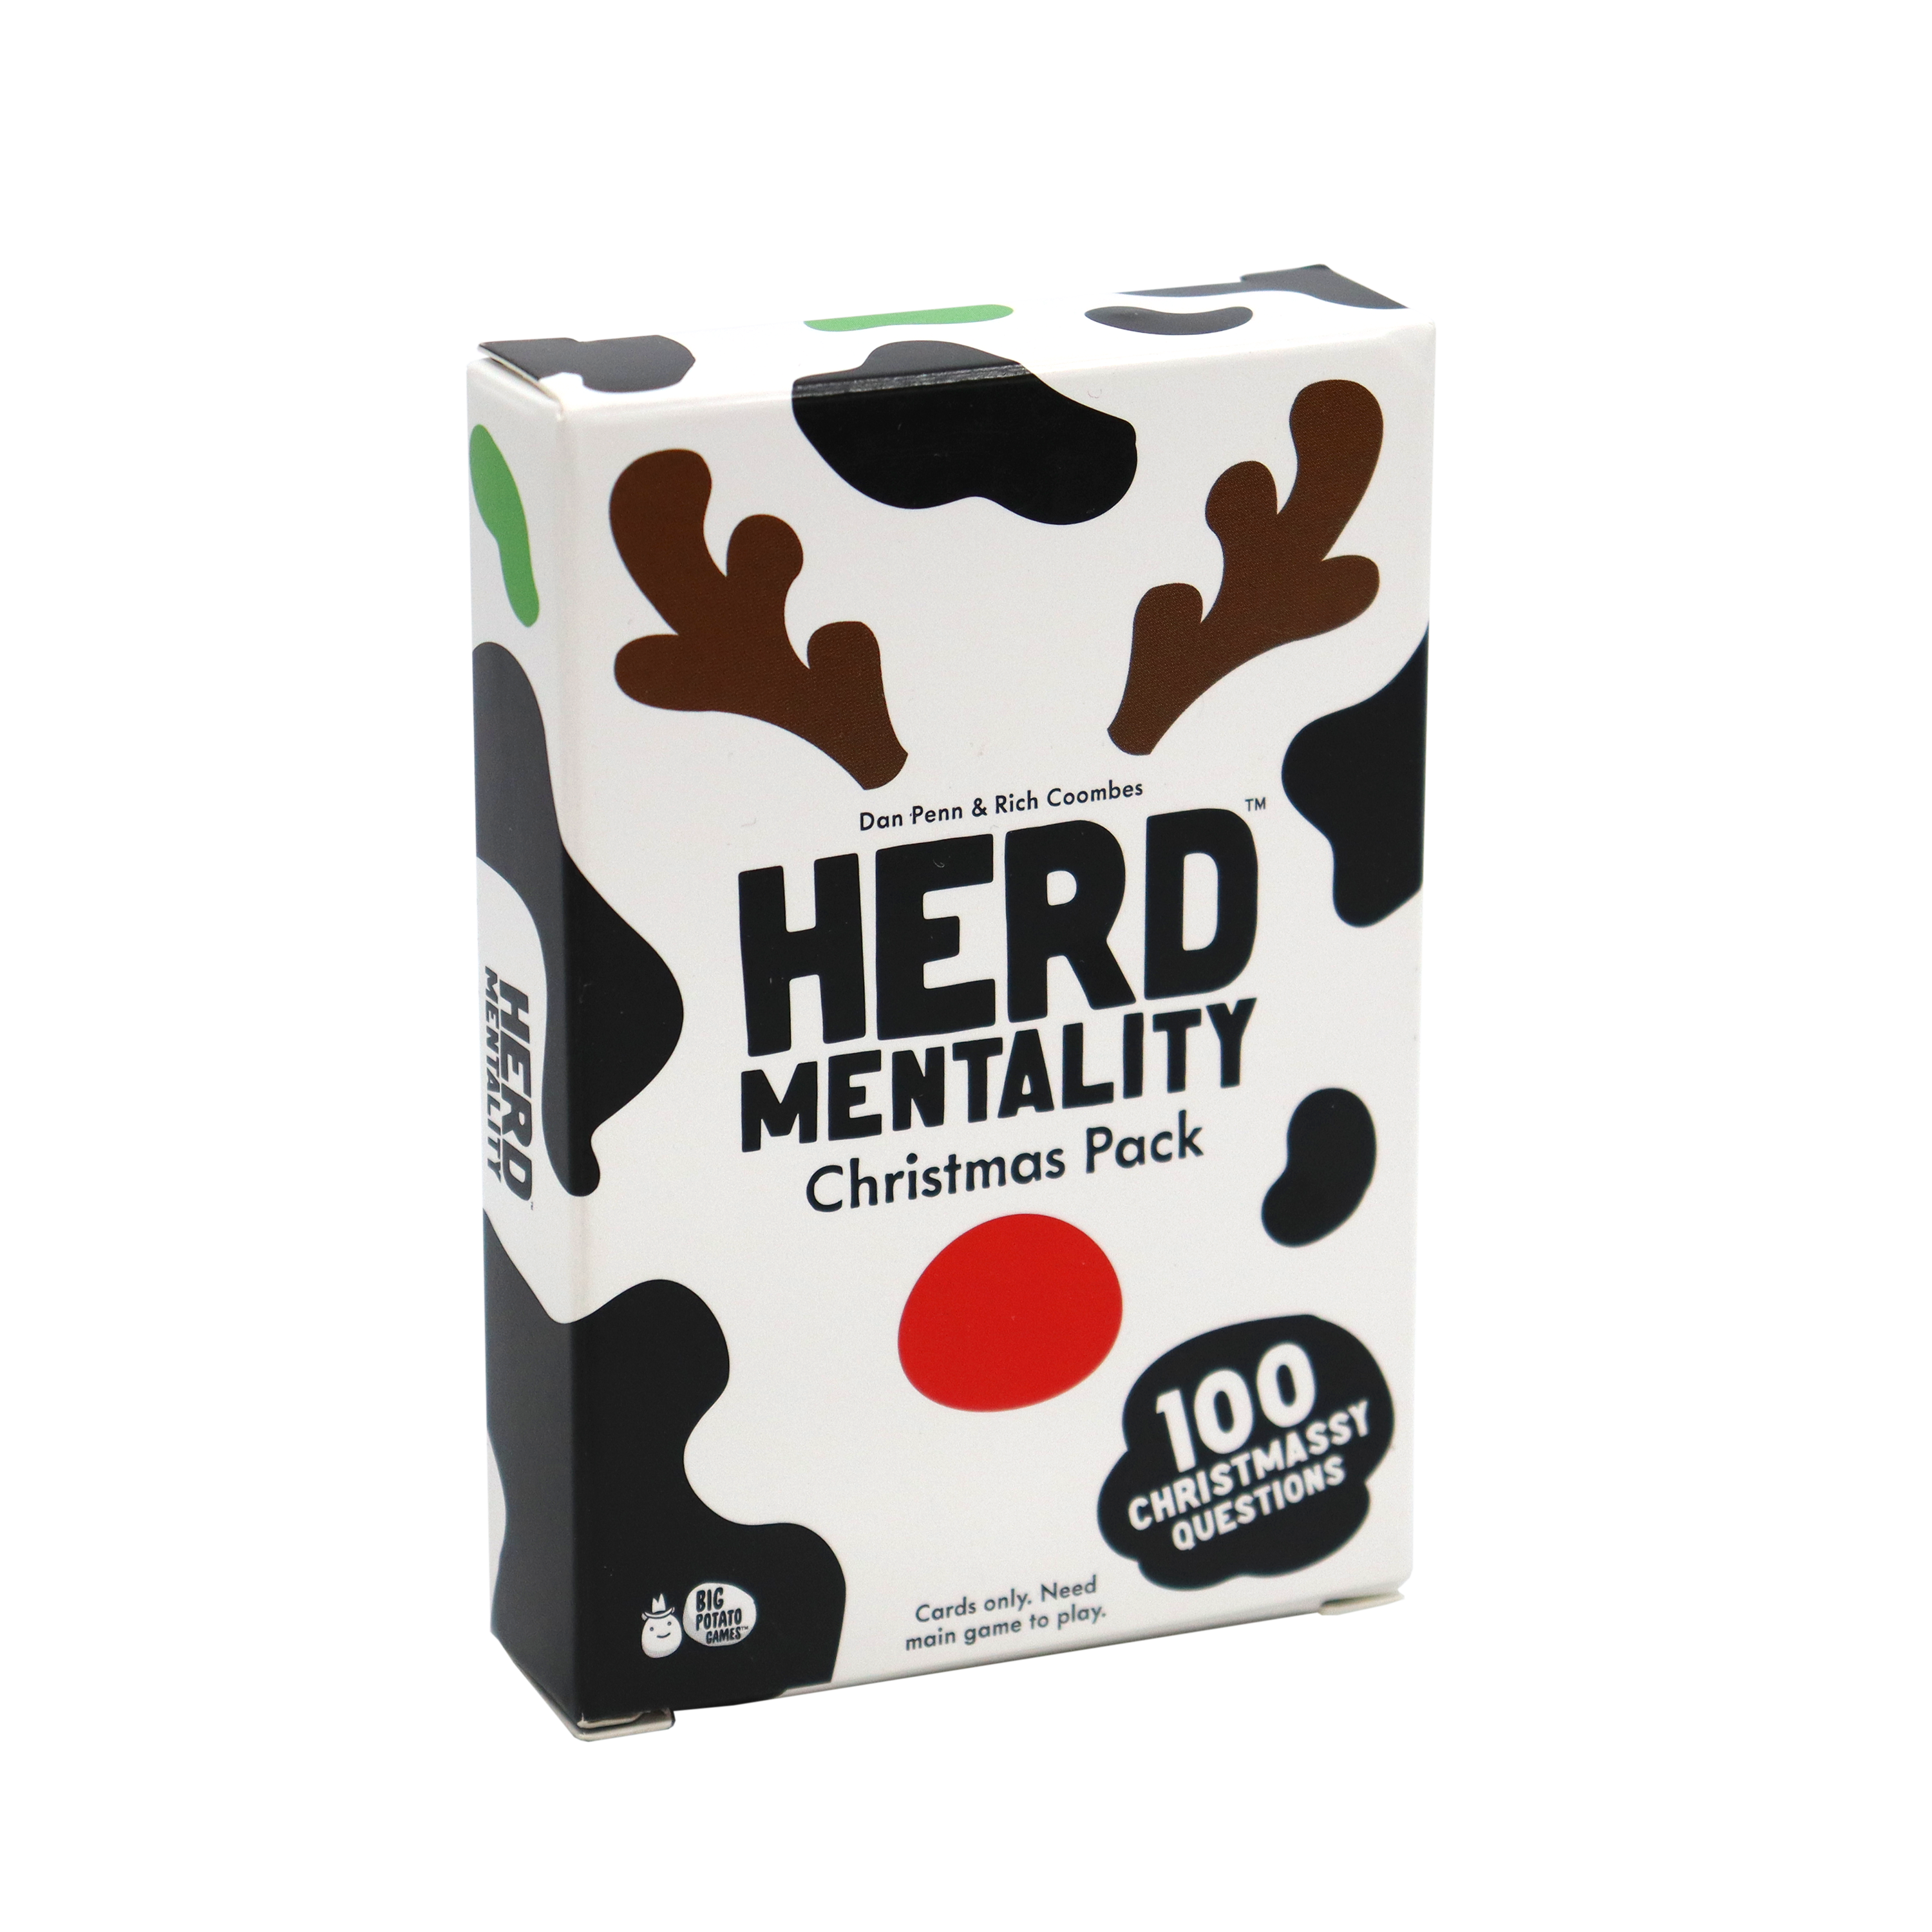 Herd Mentality Christmas Pack box